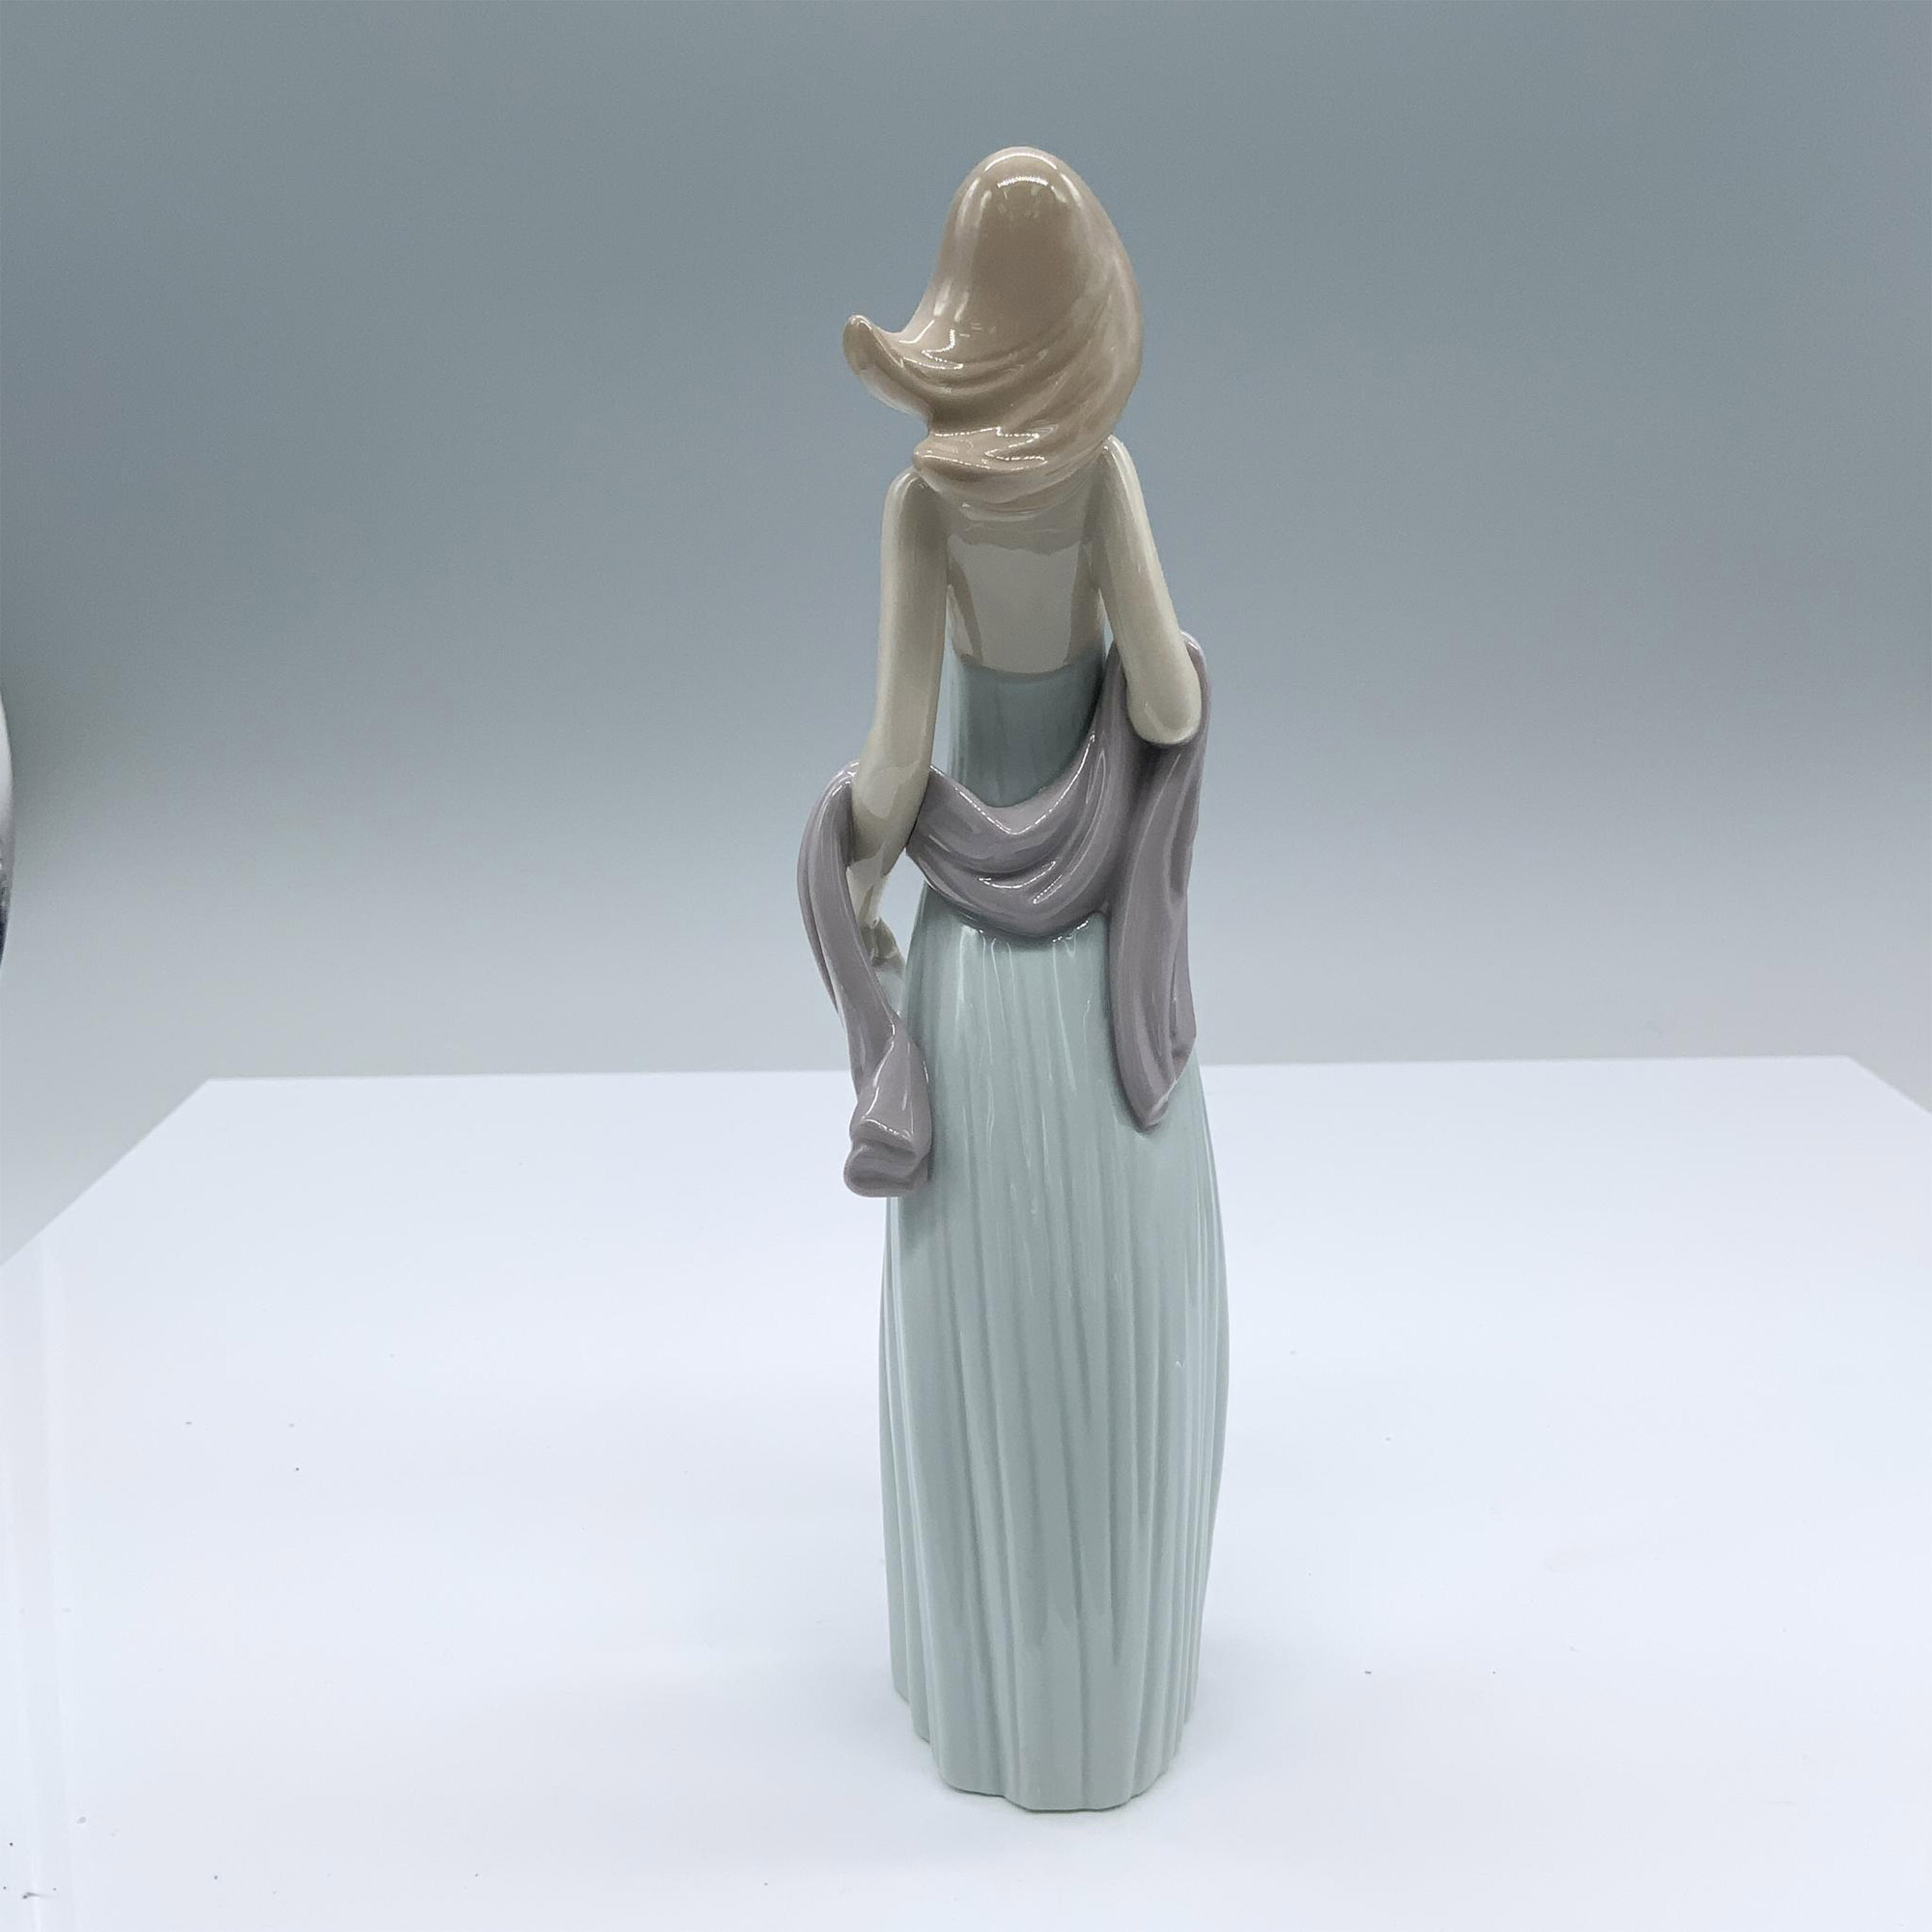 Ingenue 1005487 - Lladro Porcelain Figurine - Image 2 of 4